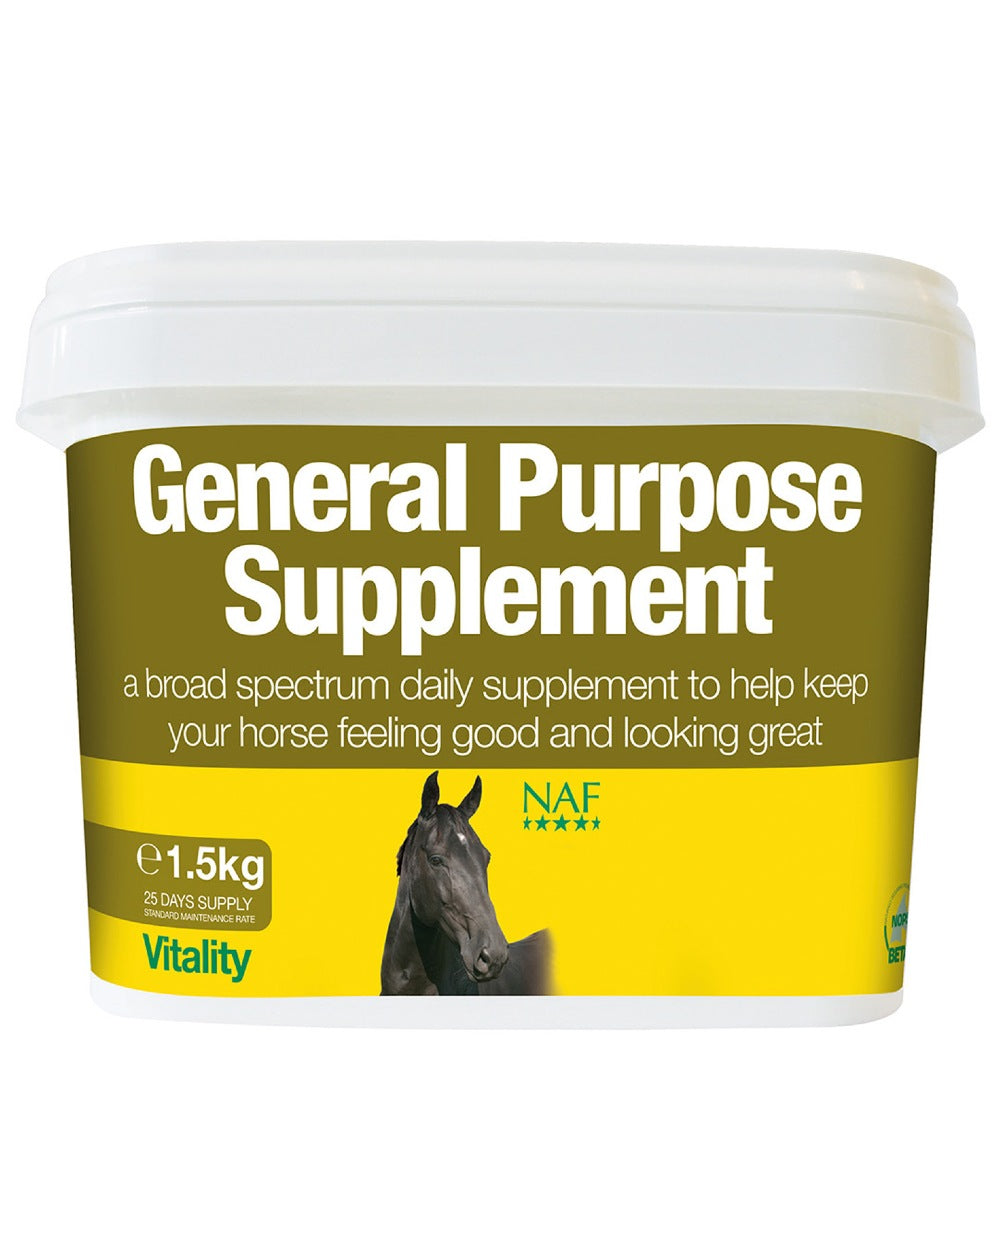 NAF General Purpose Supplement 1.5kg on white background